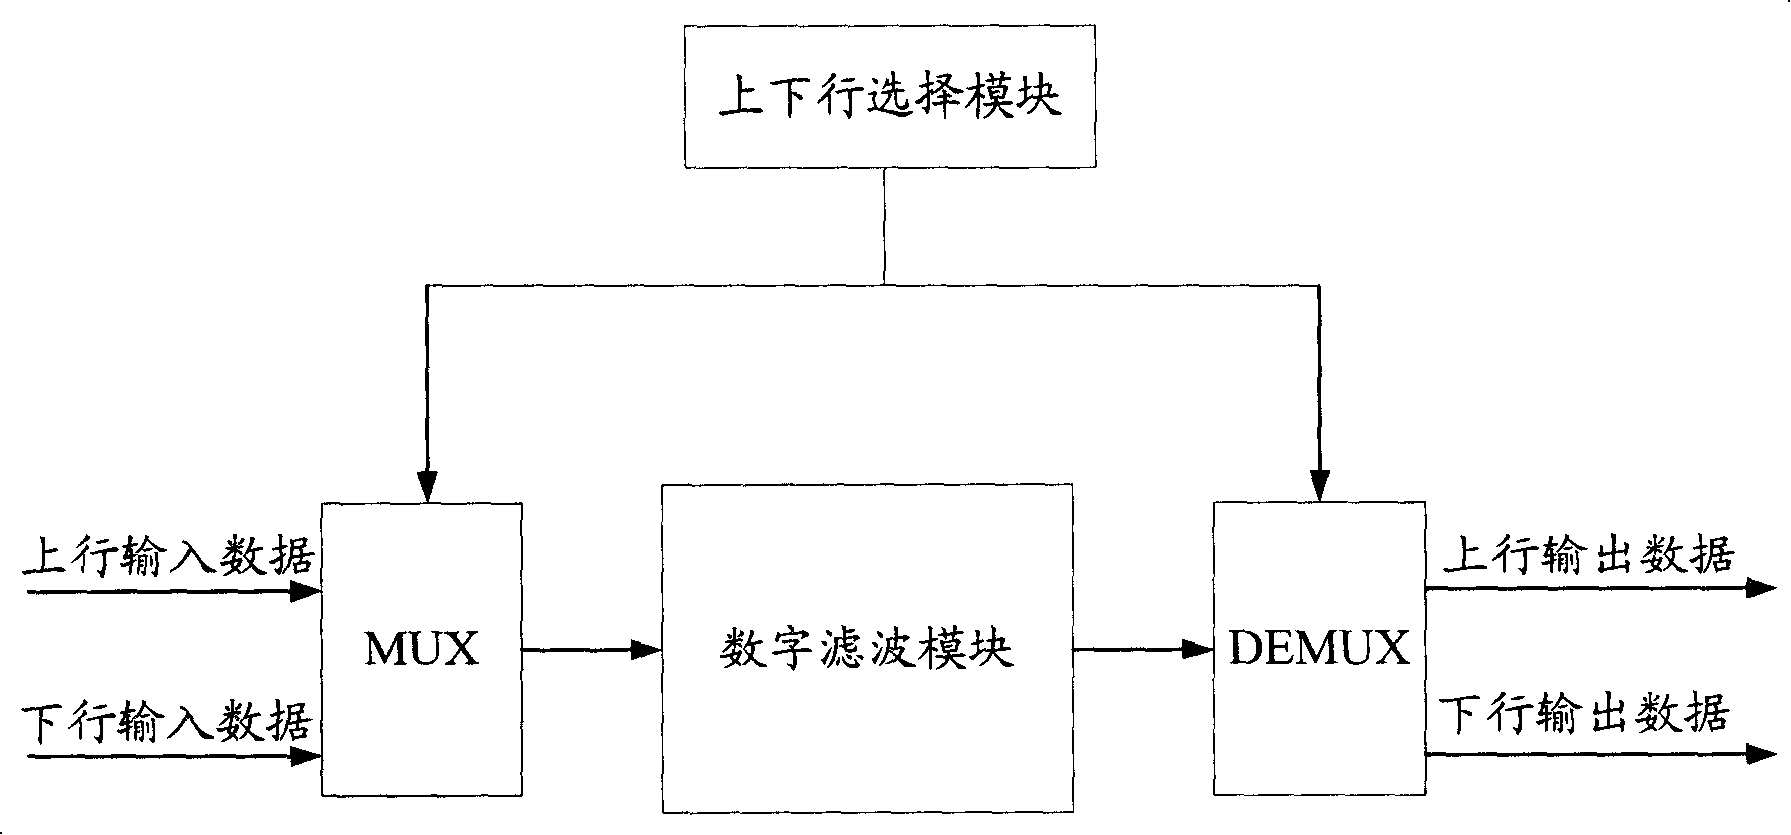 A time division duplex digital filter